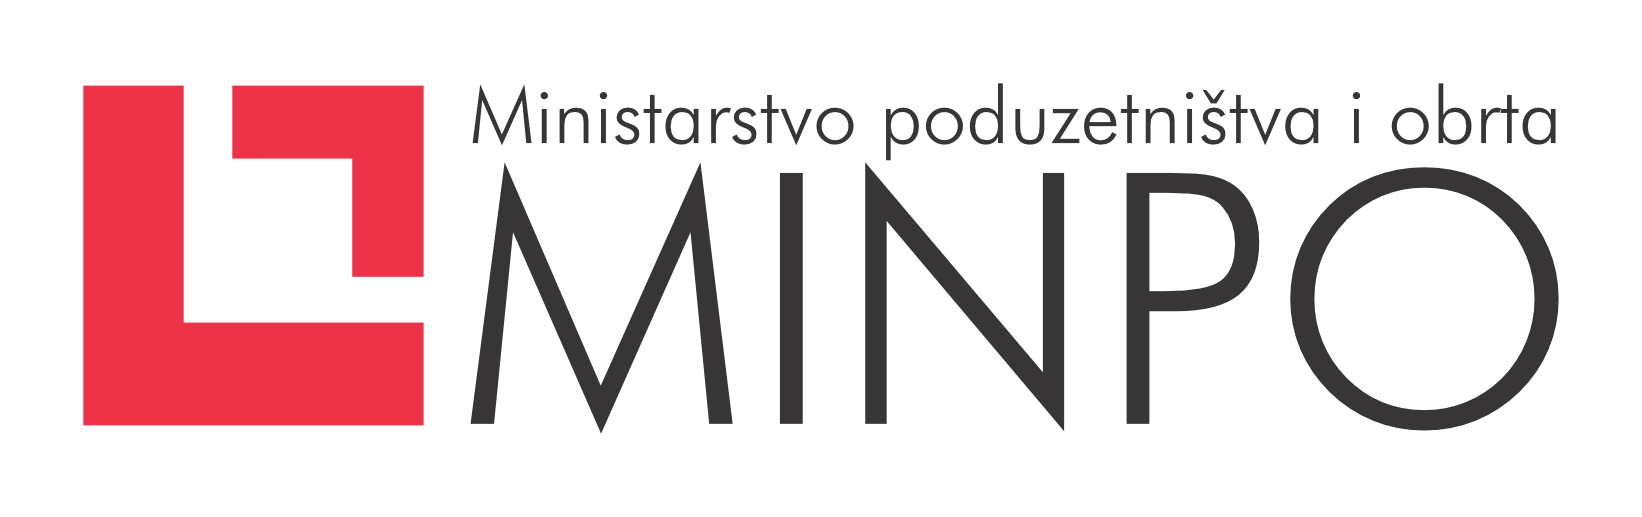 Minpo logo